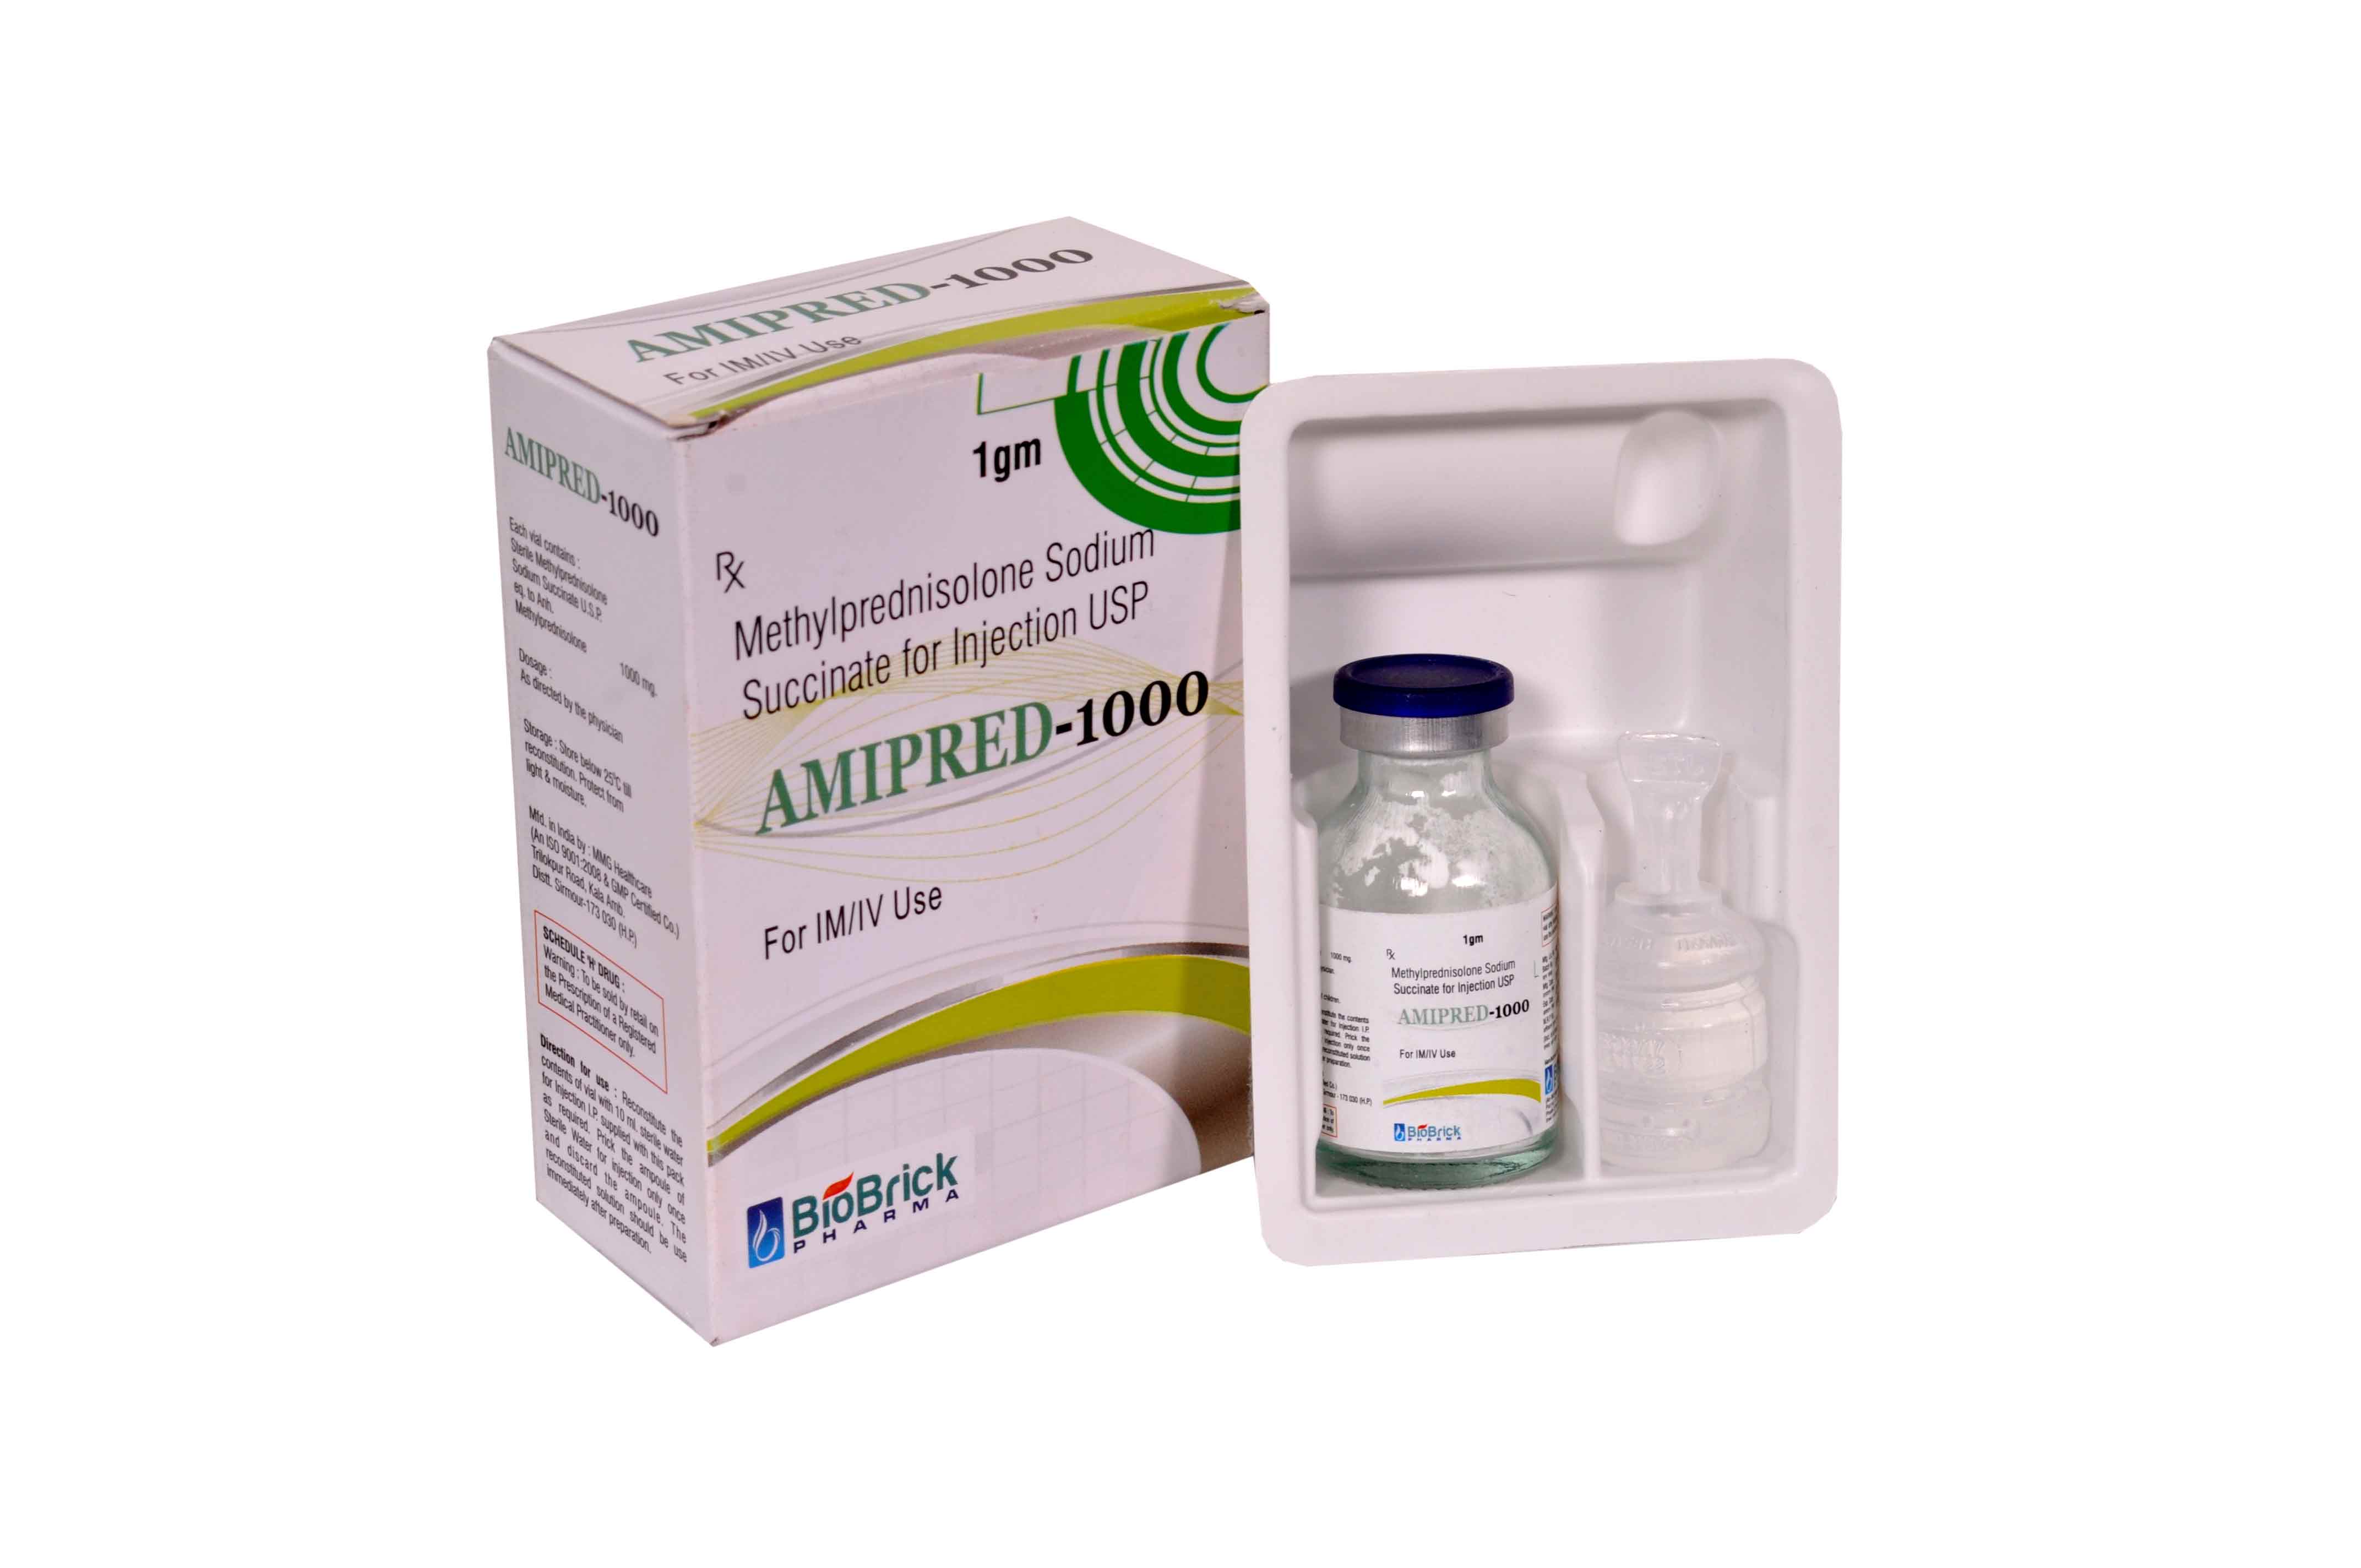 AMIPRED-1000